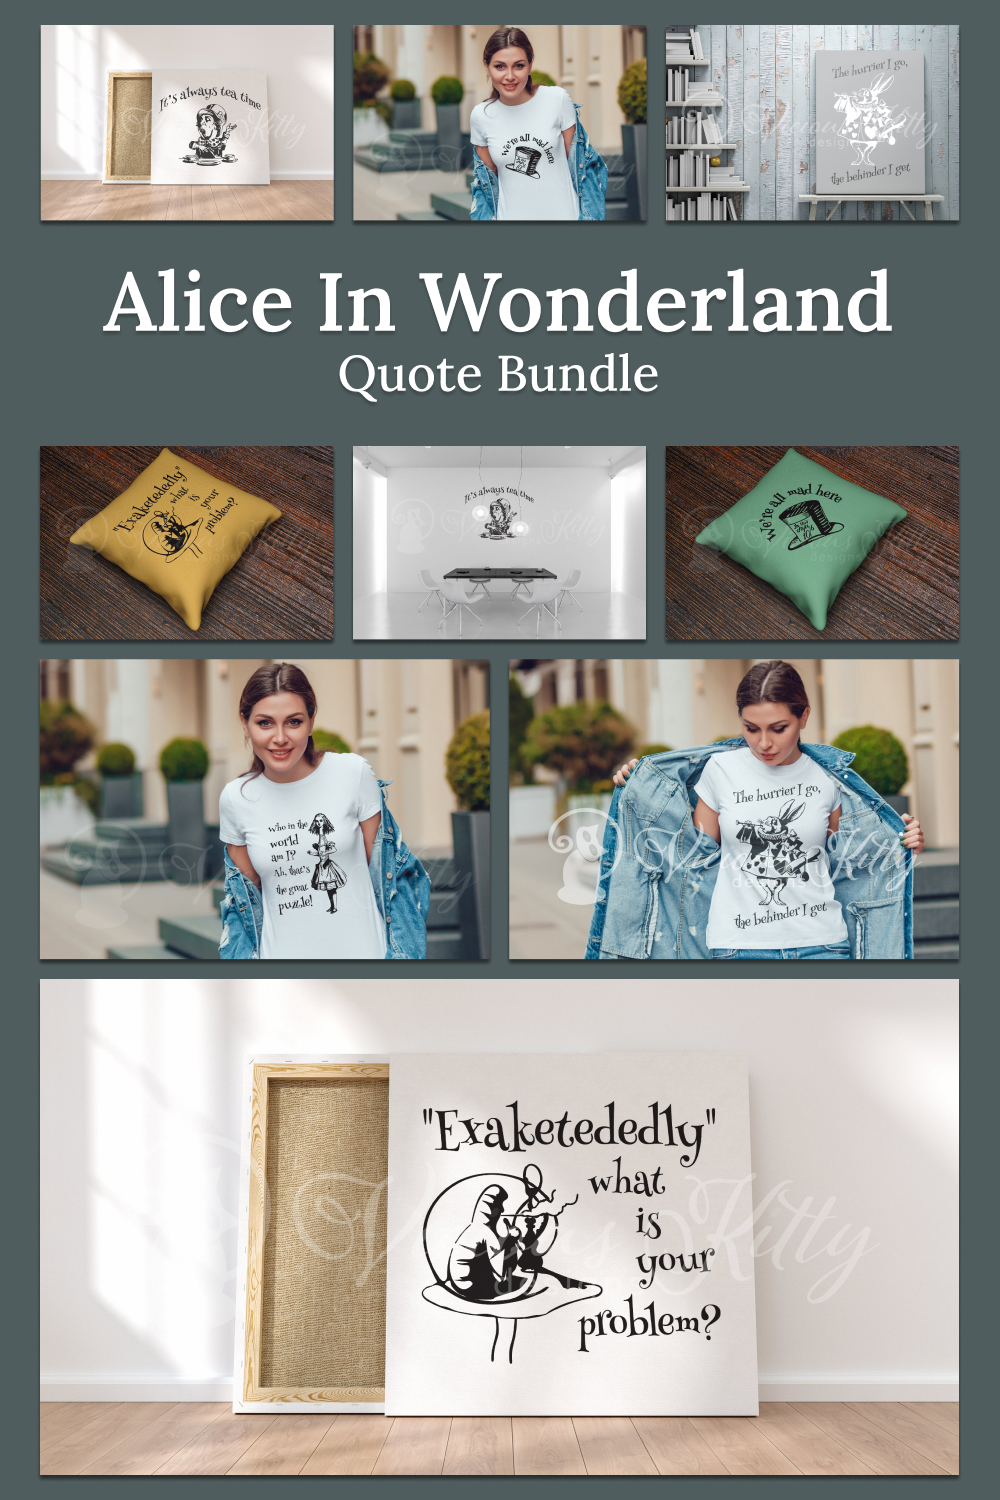 Alice in wonderland quote bundle.